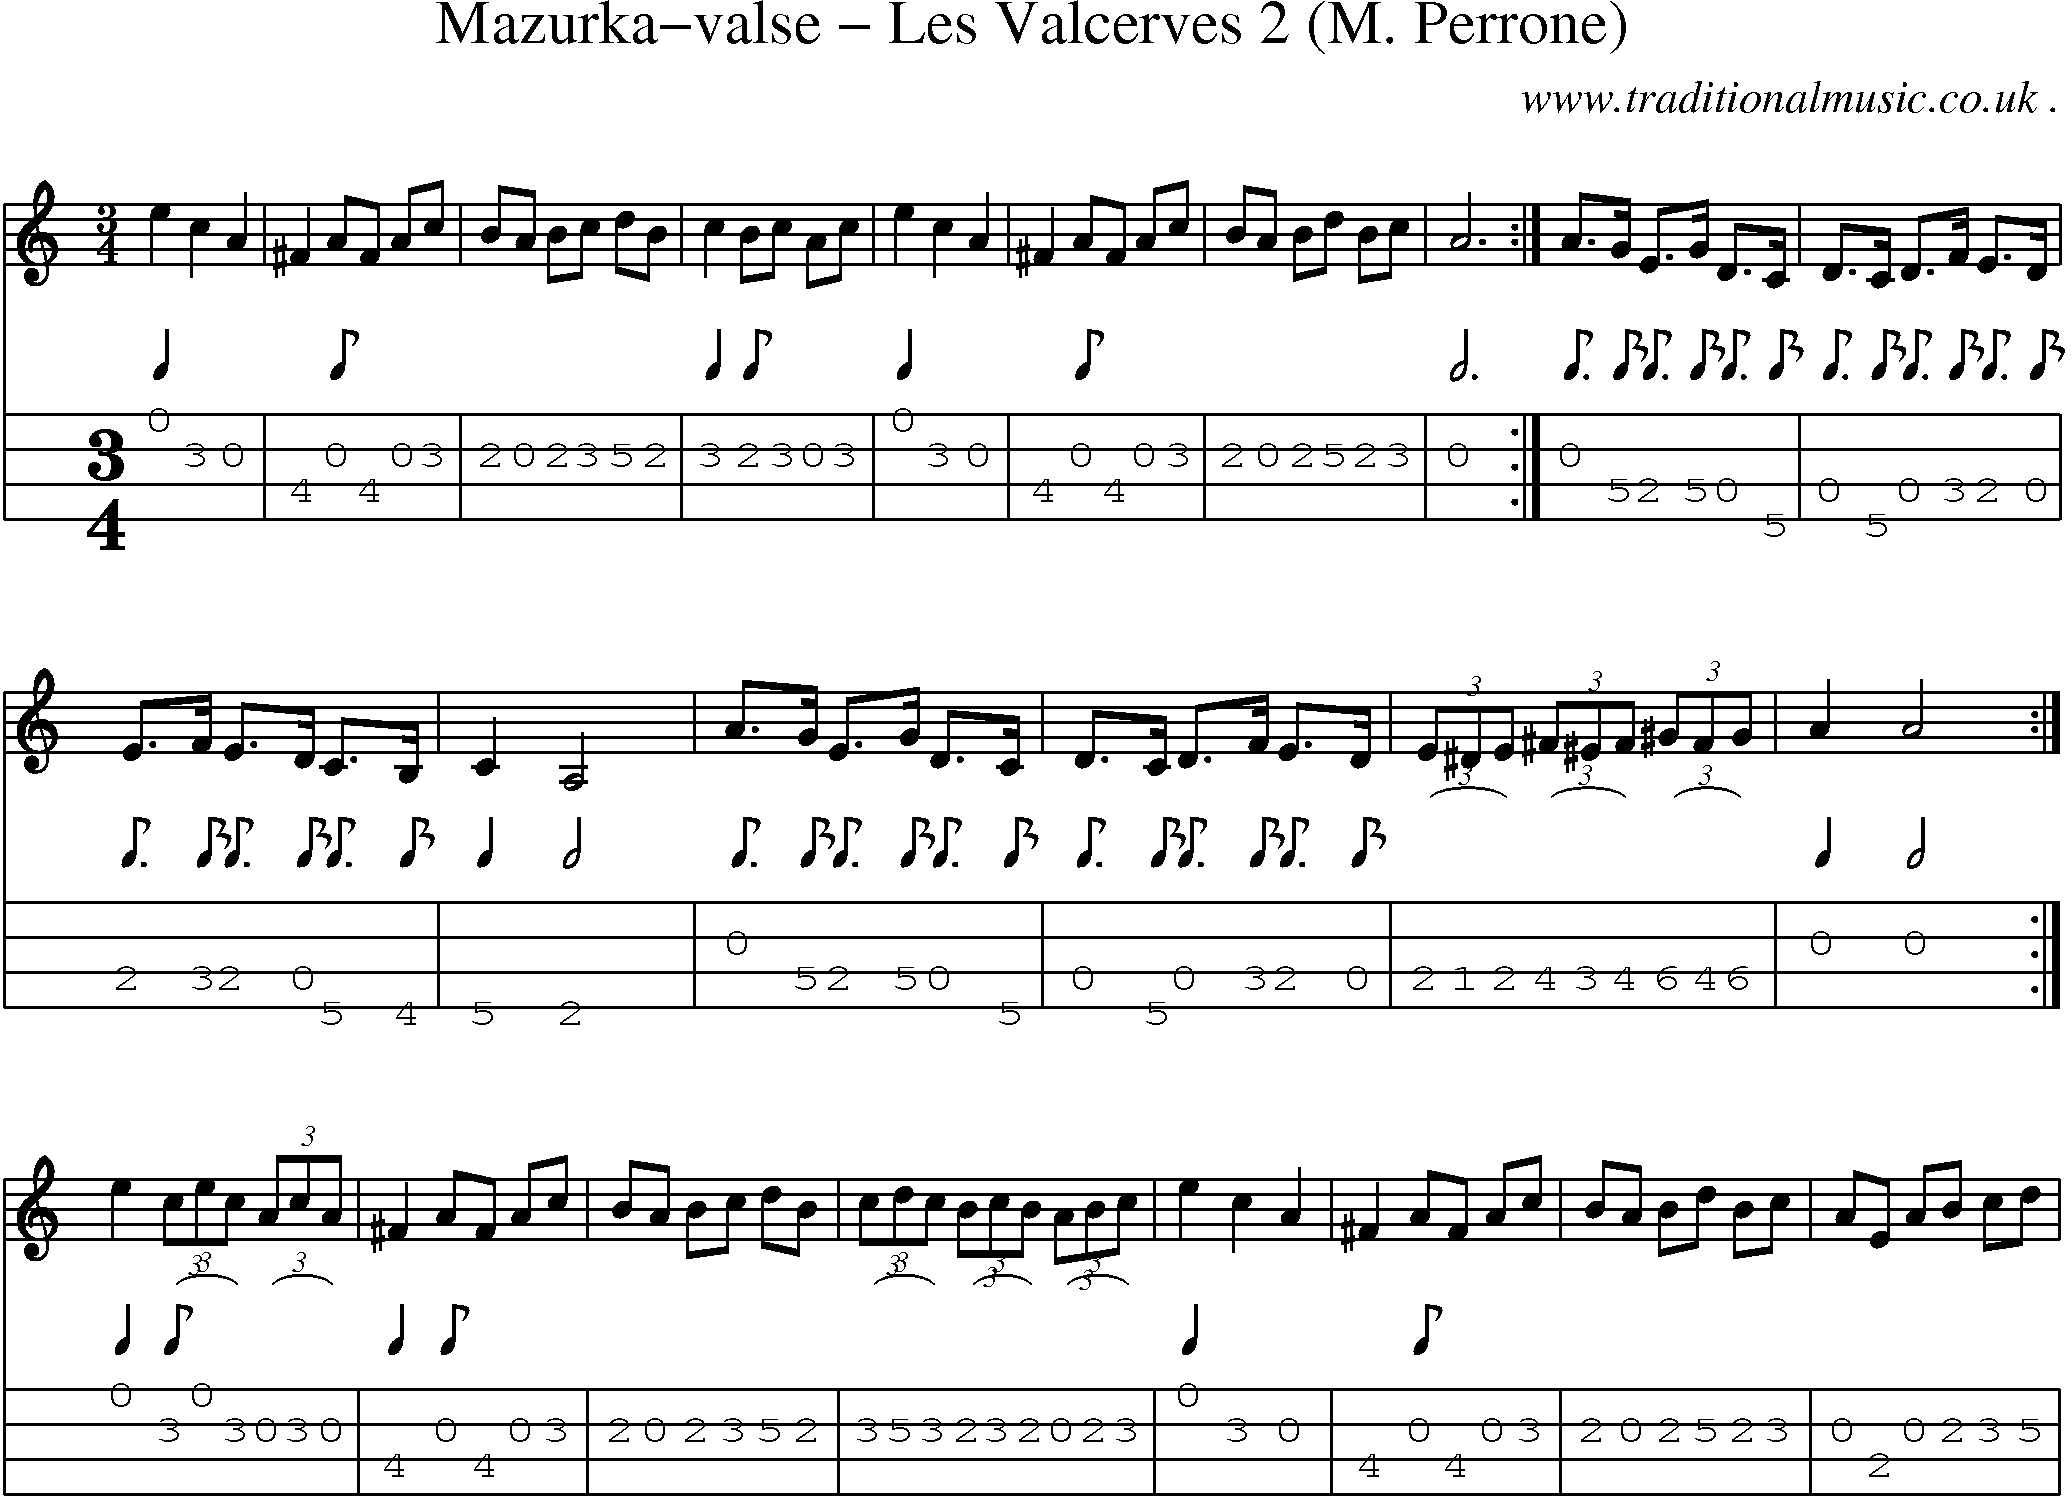 Sheet-Music and Mandolin Tabs for Mazurka-valse Les Valcerves 2 (m Perrone)